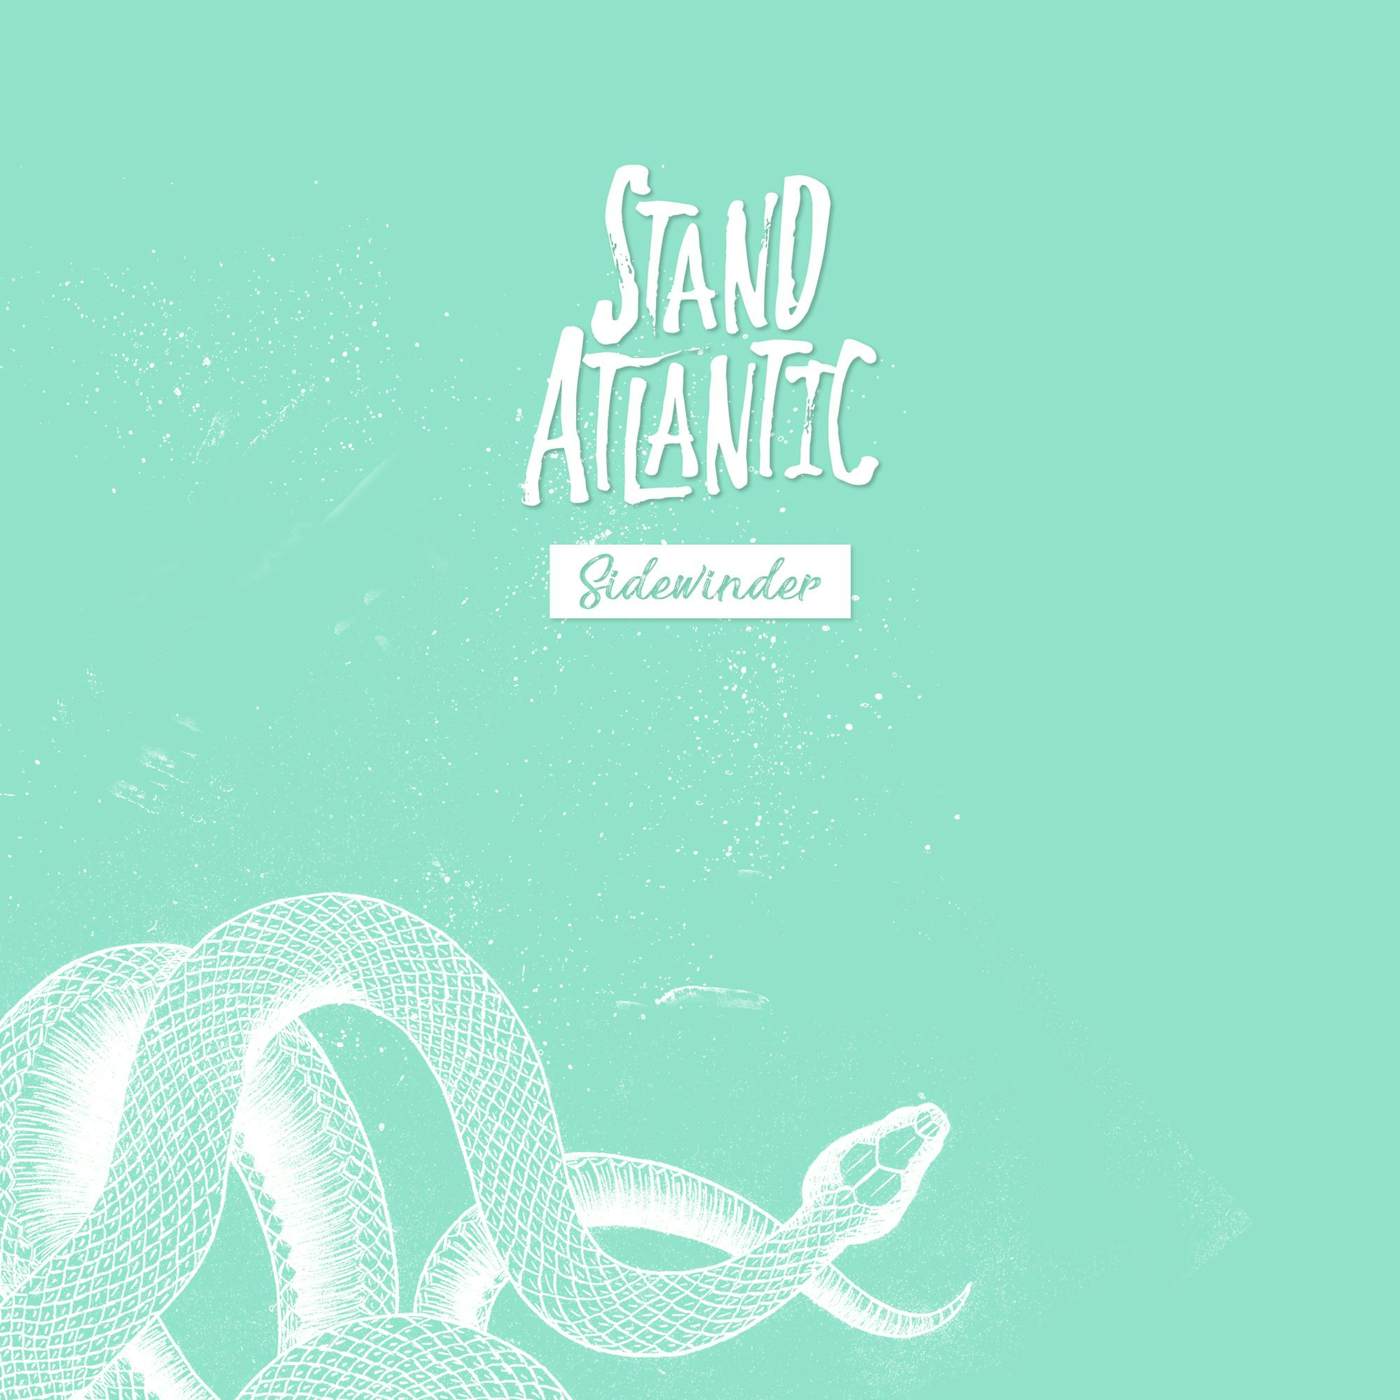 Stand Atlantic Sidewinder Vinyl Record